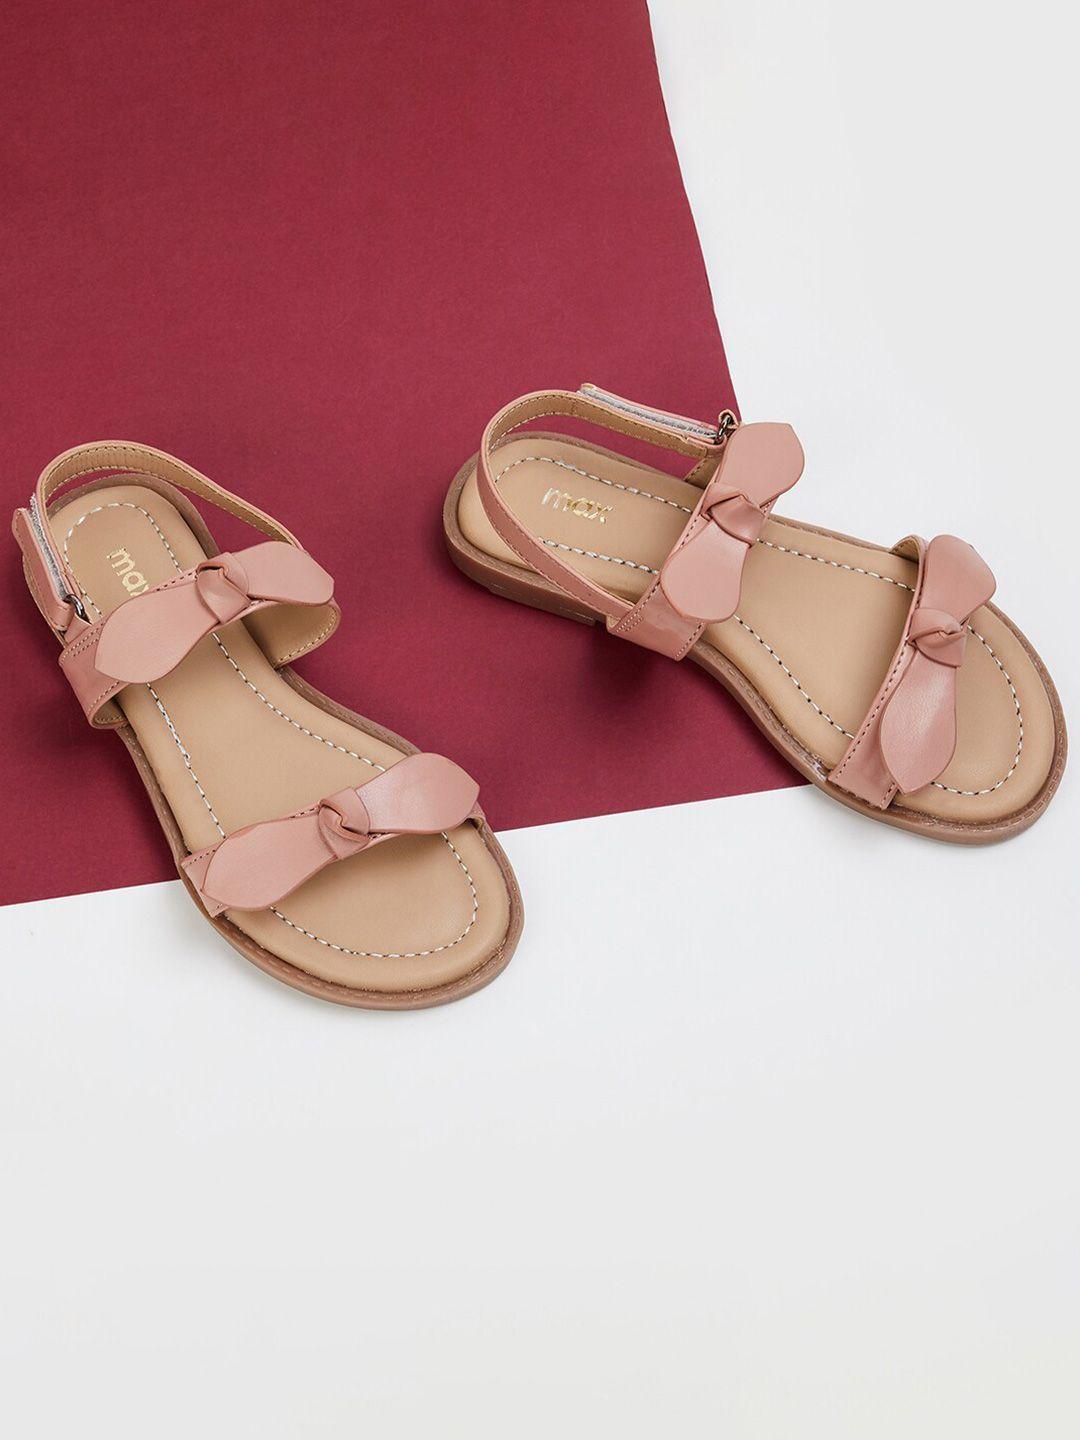 max-girls-pink-pu-comfort-sandals